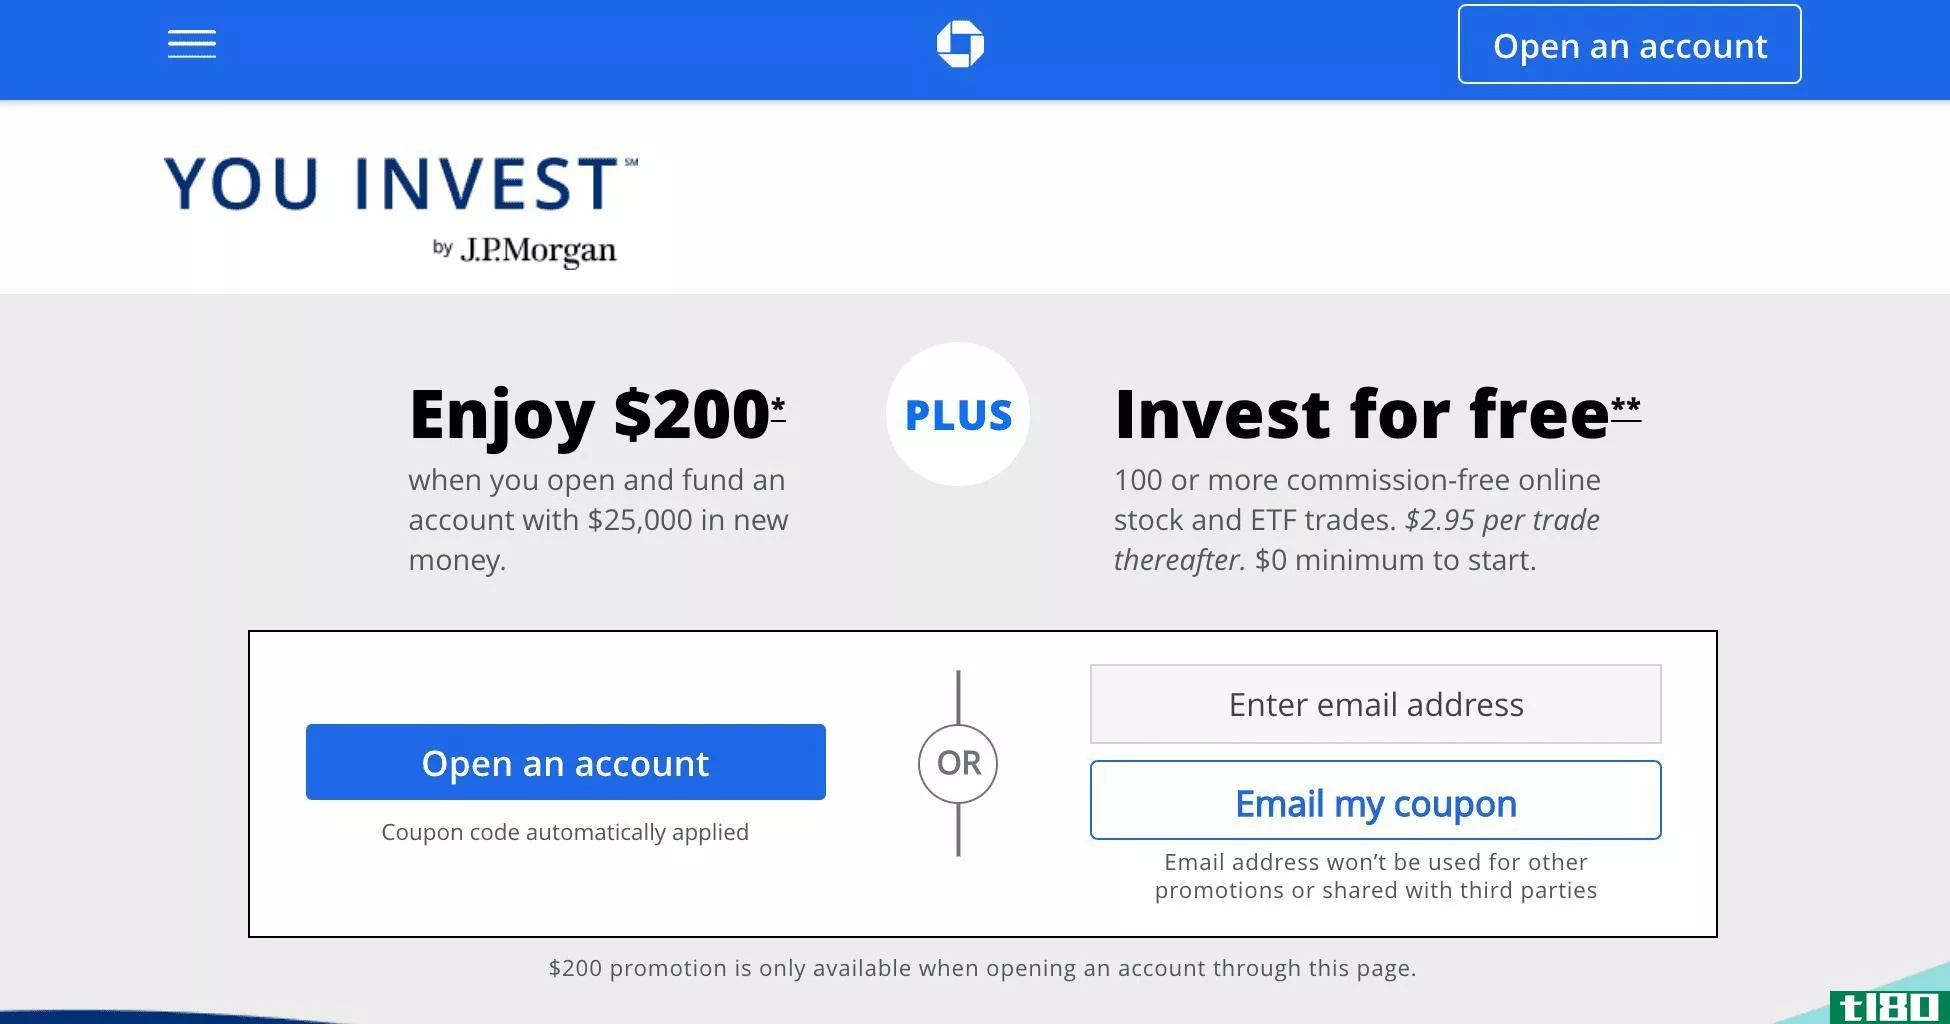 J.P.Morgan's You Invest platform signup page.